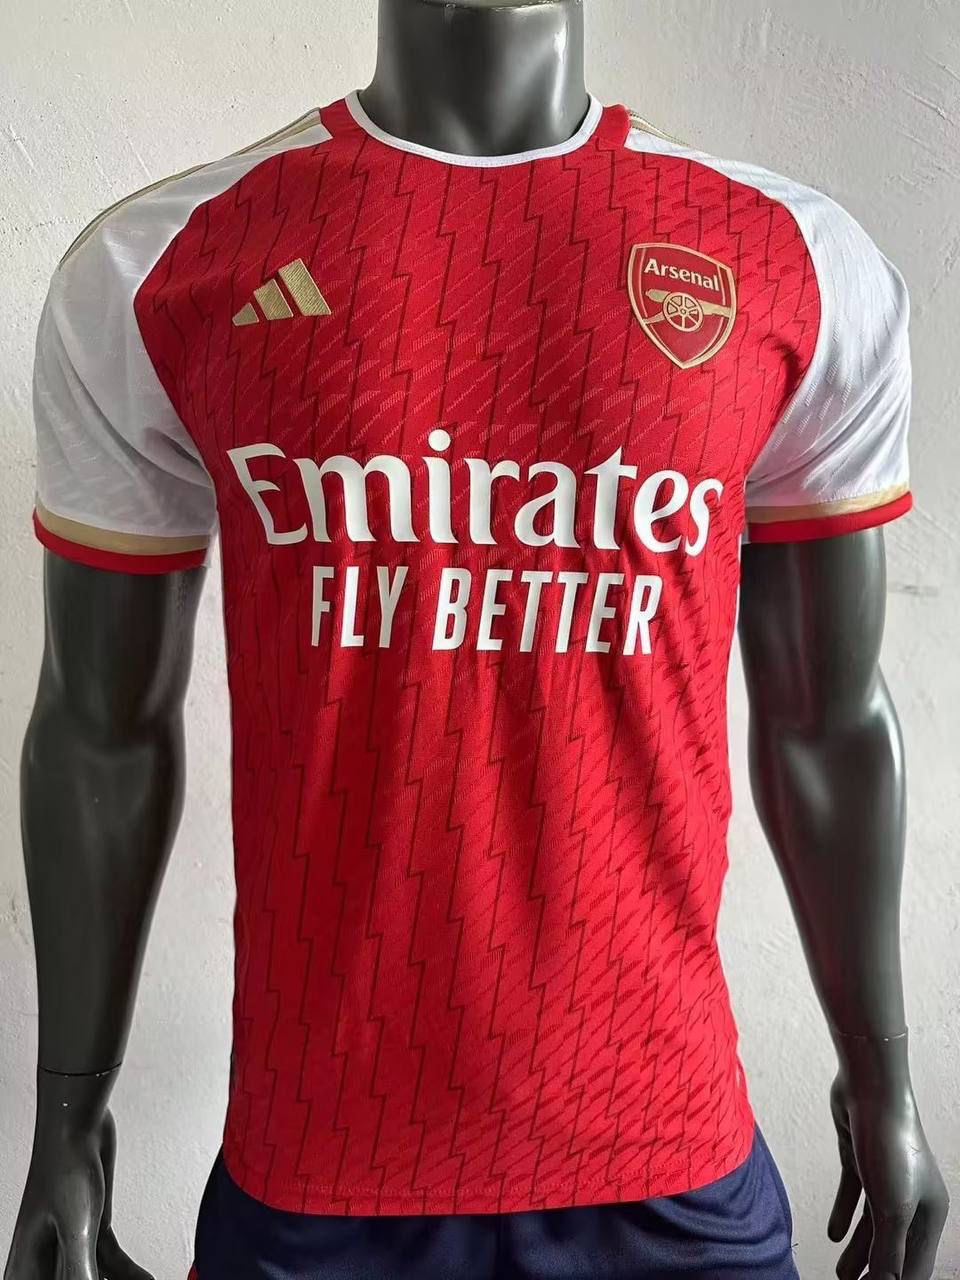 Arsenal F.C. shirt